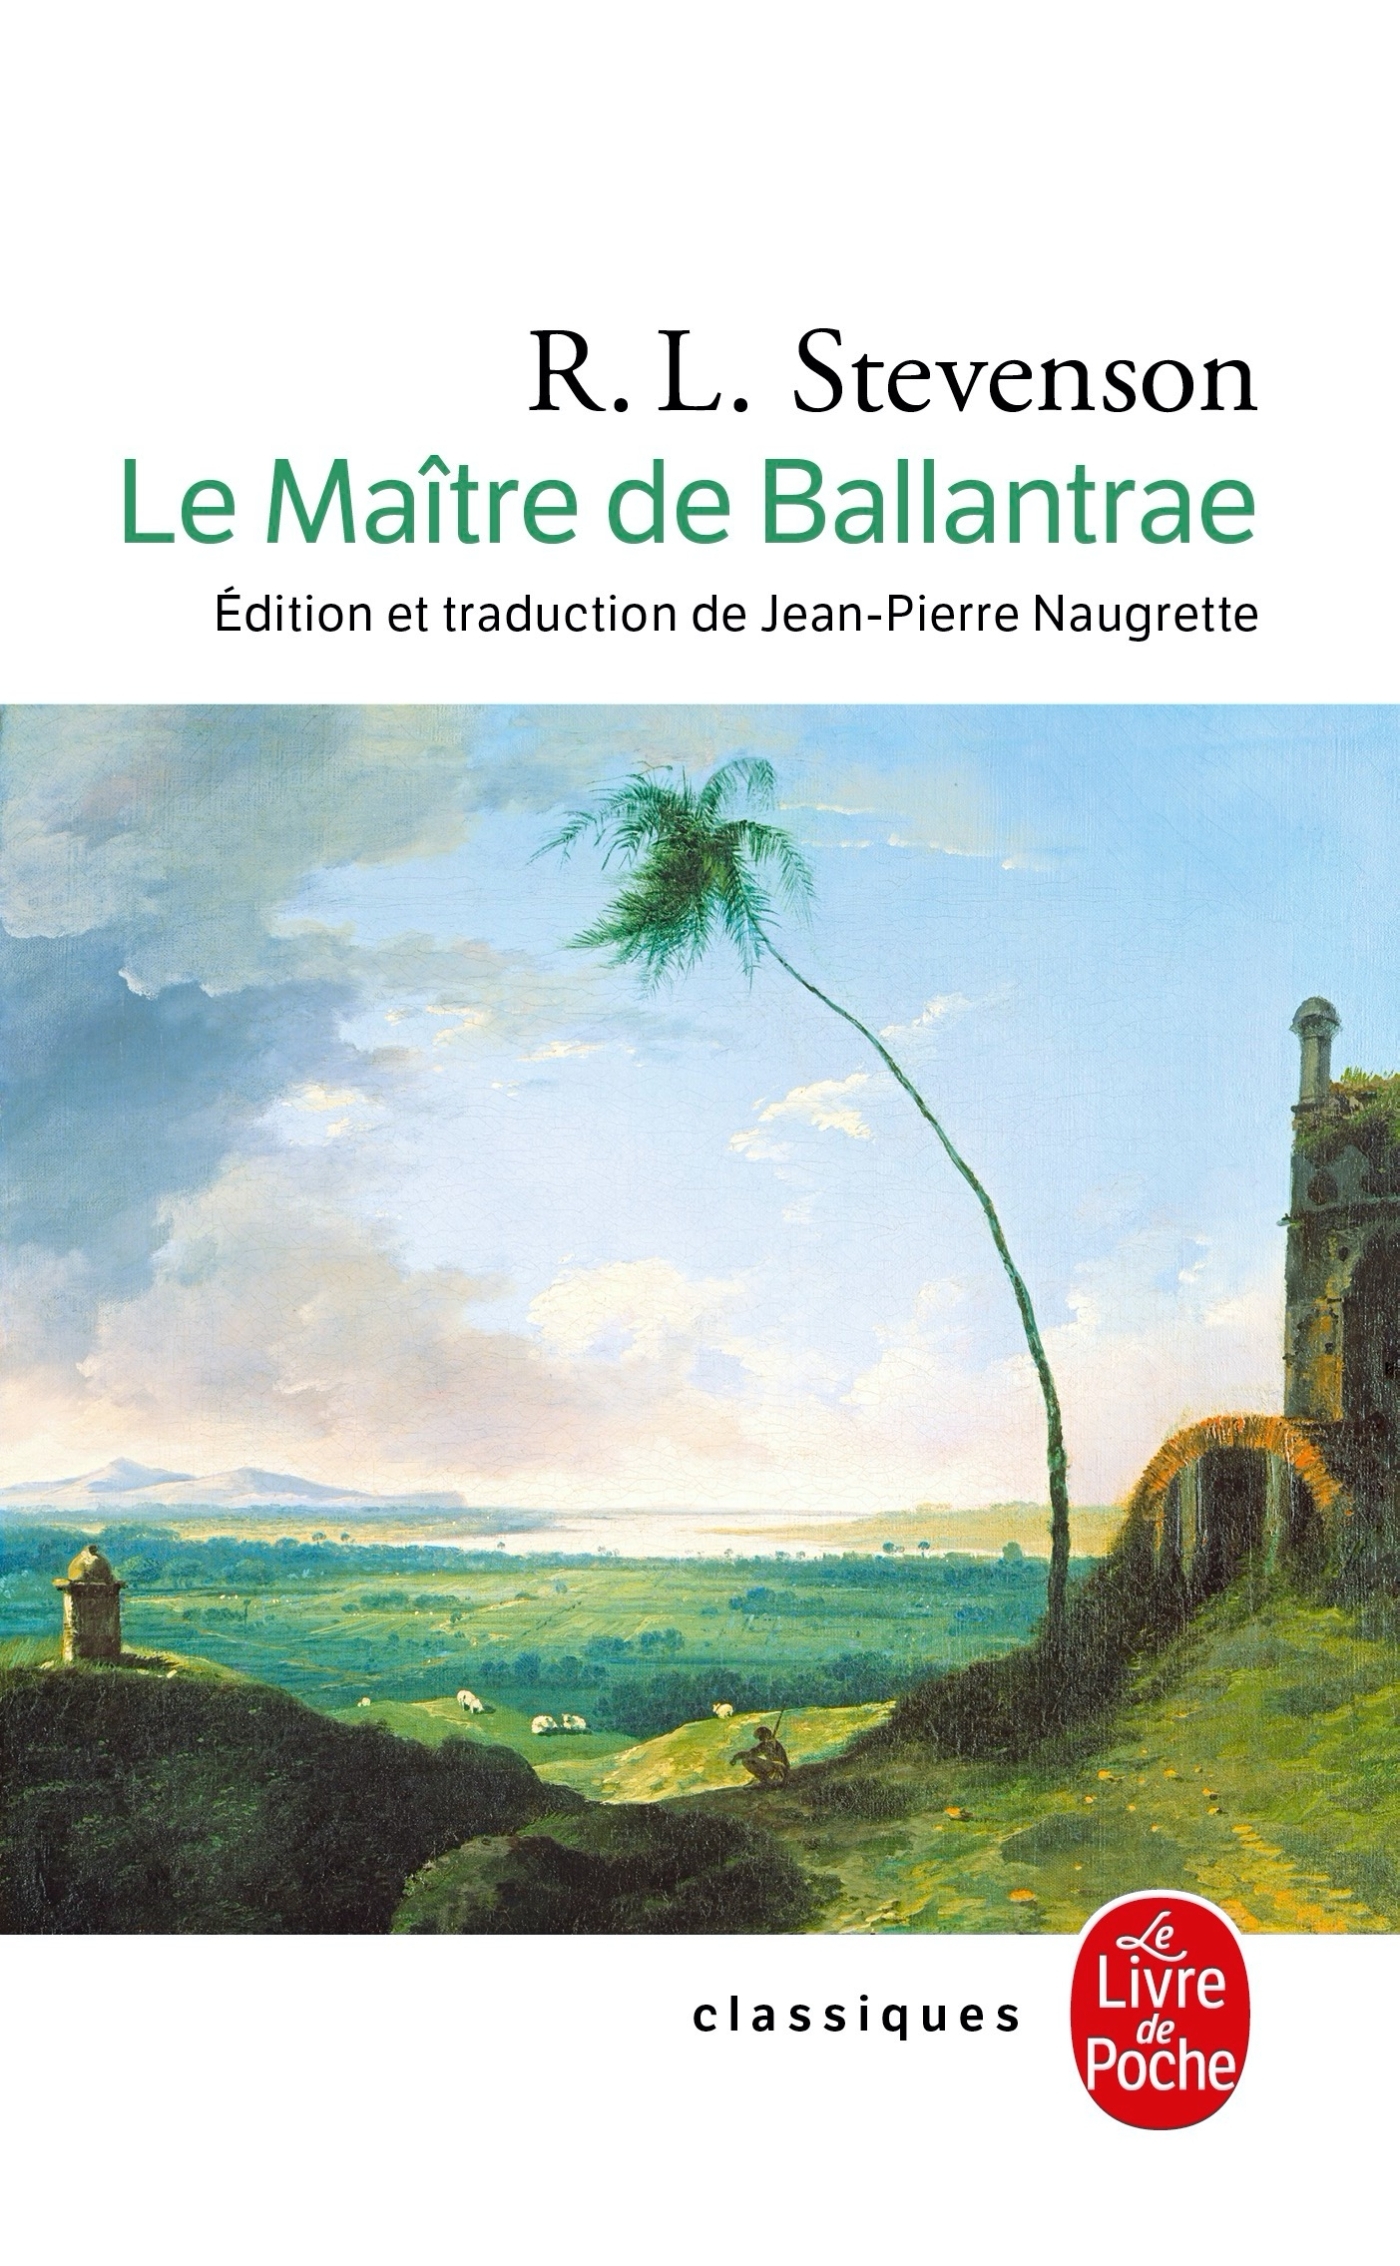 Le Maître de Ballantrae (9782253005131-front-cover)